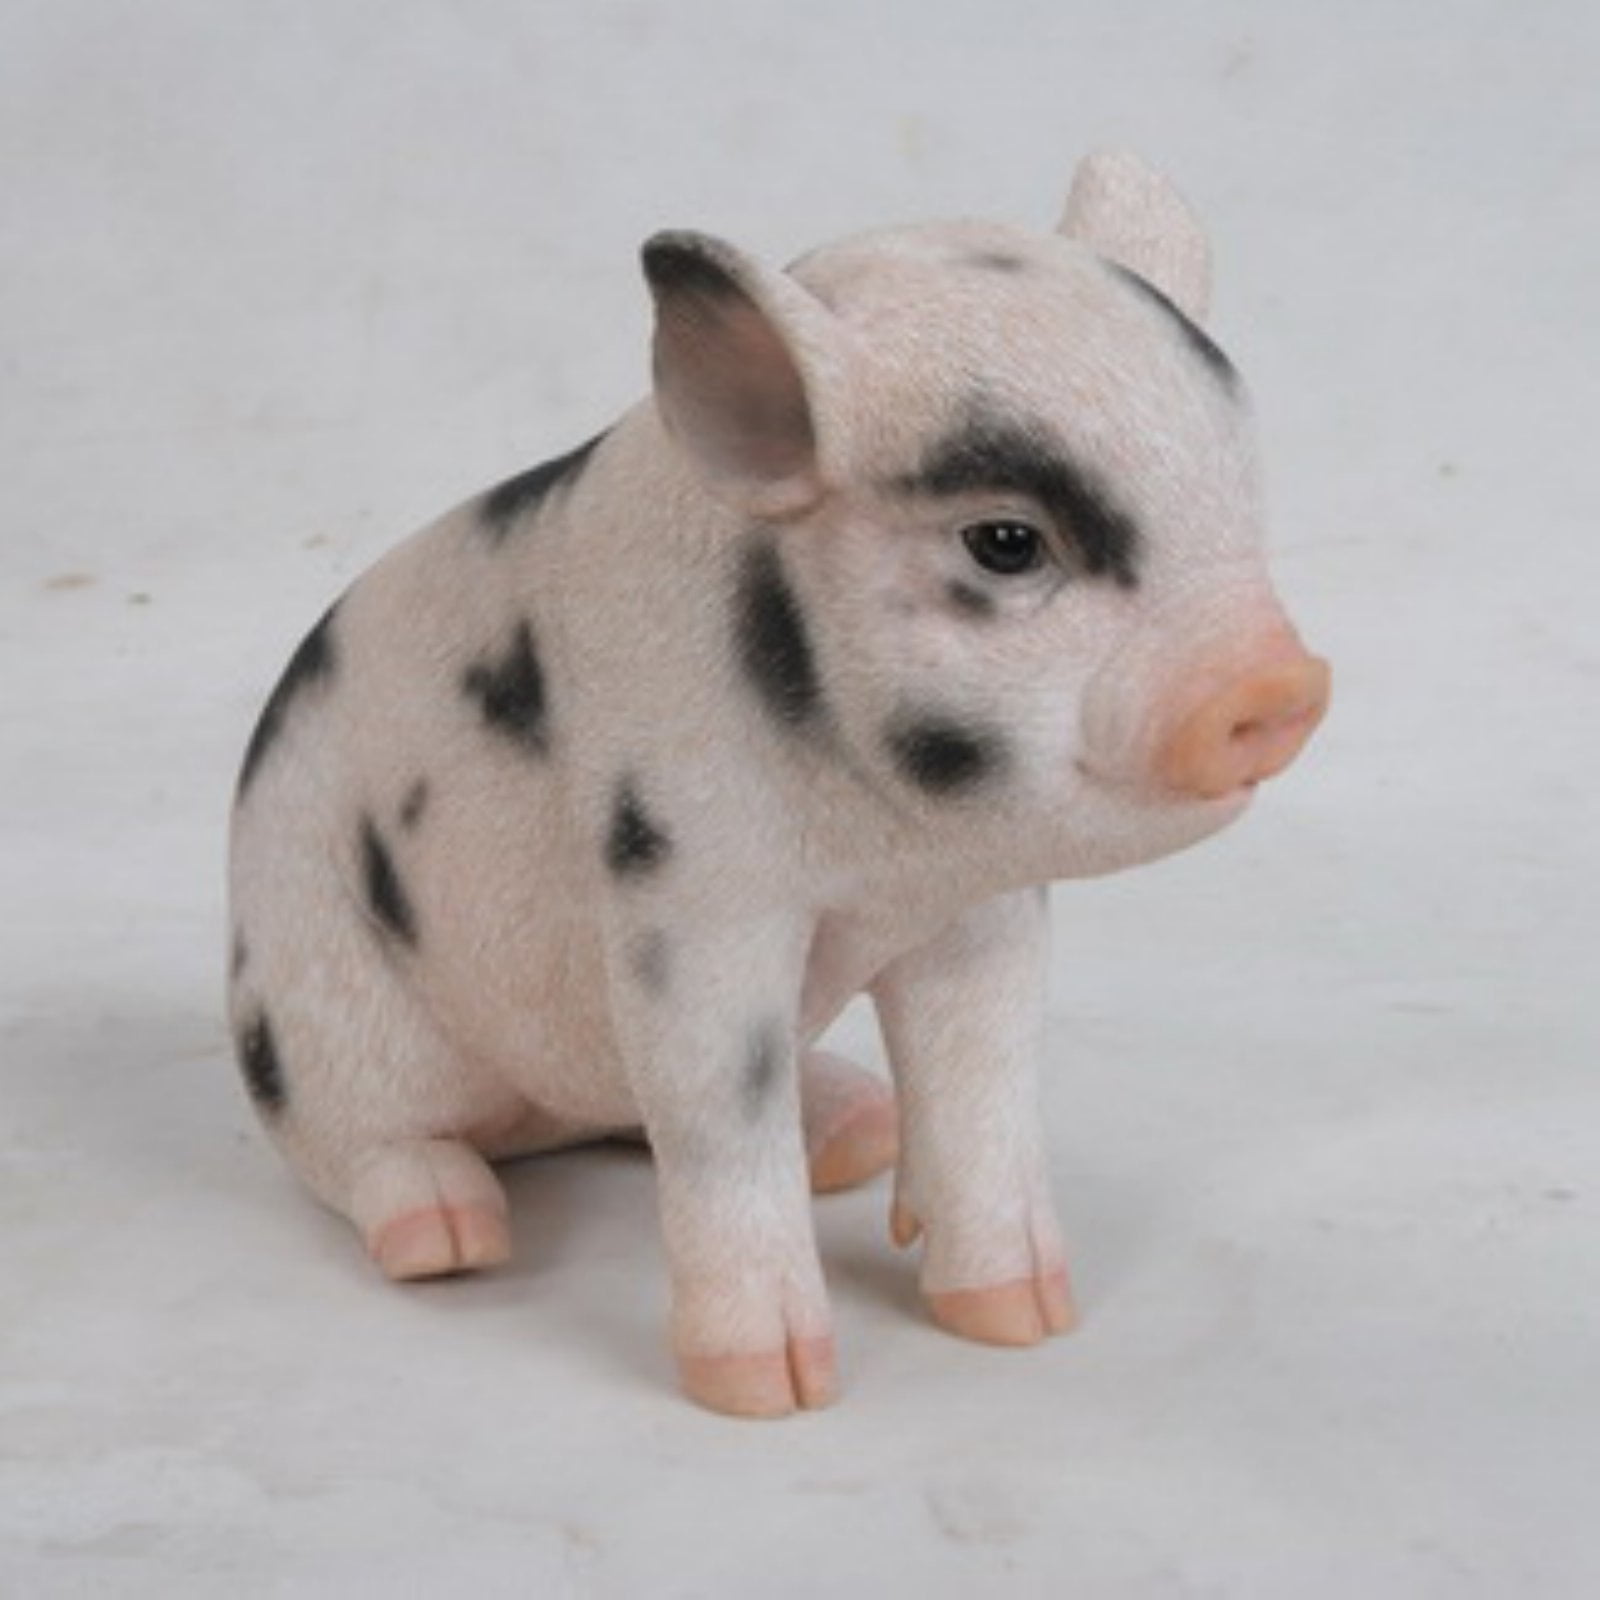 Buy Baby Pig Sitting Set of Three Little Pigs Yard Ornament Resin